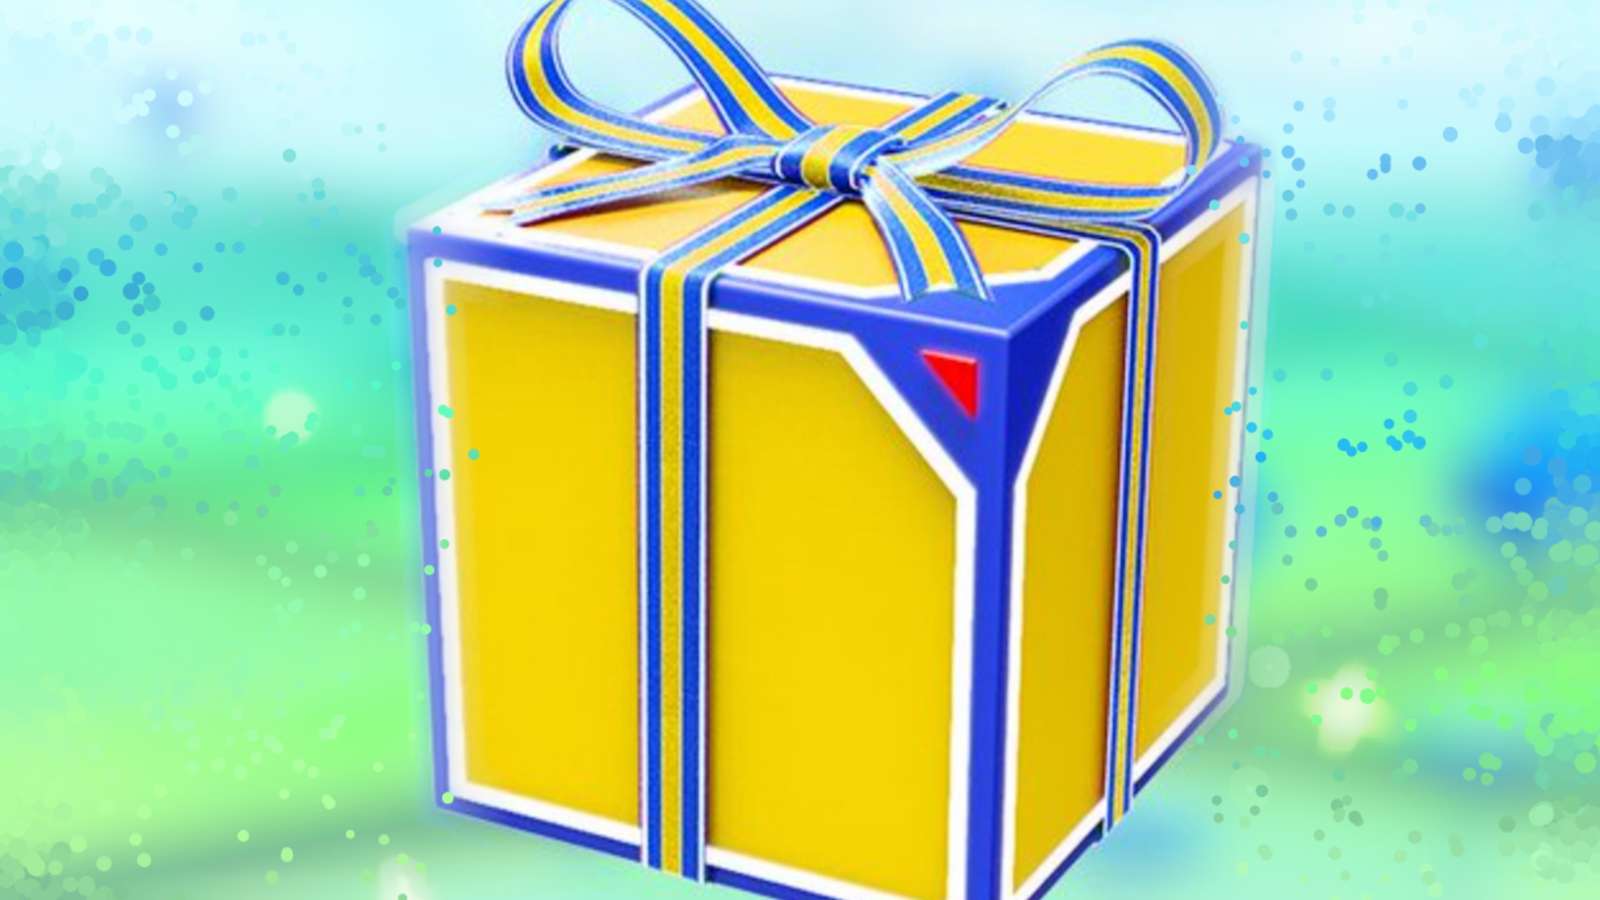 Bundle Box from Pokemon Go